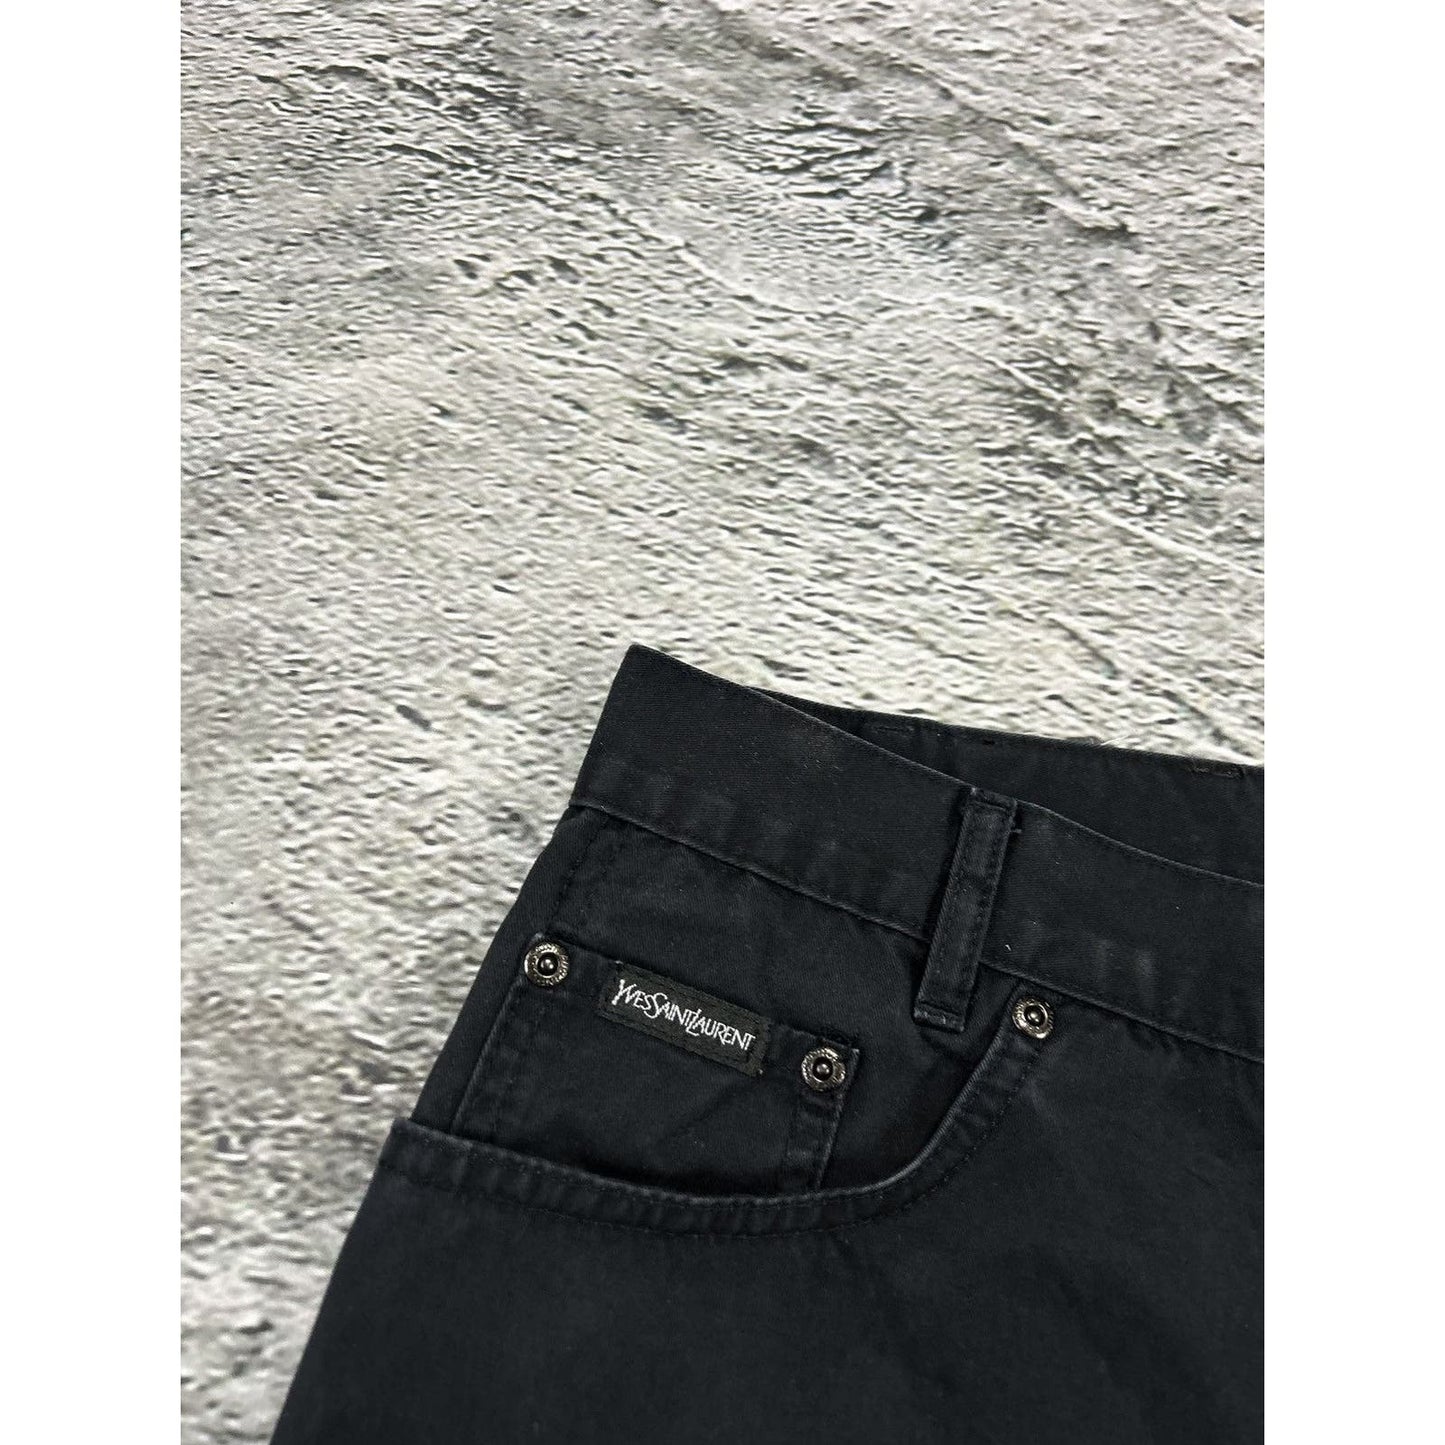 Yves Saint Laurent vintage black YSL logo chino pants